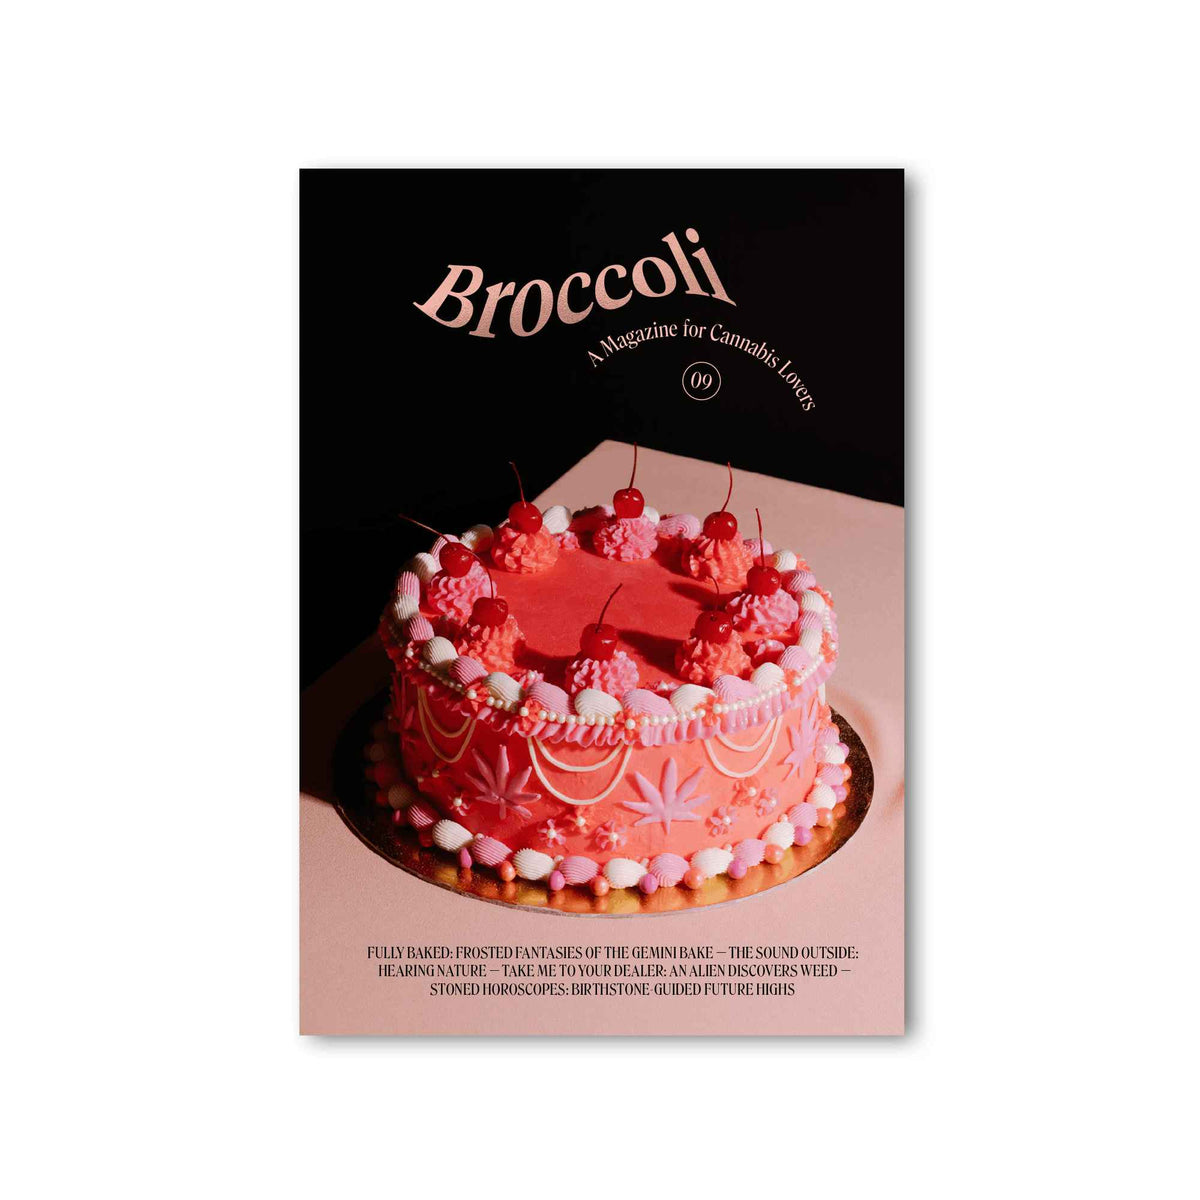 Broccoli Magazine Issue 9